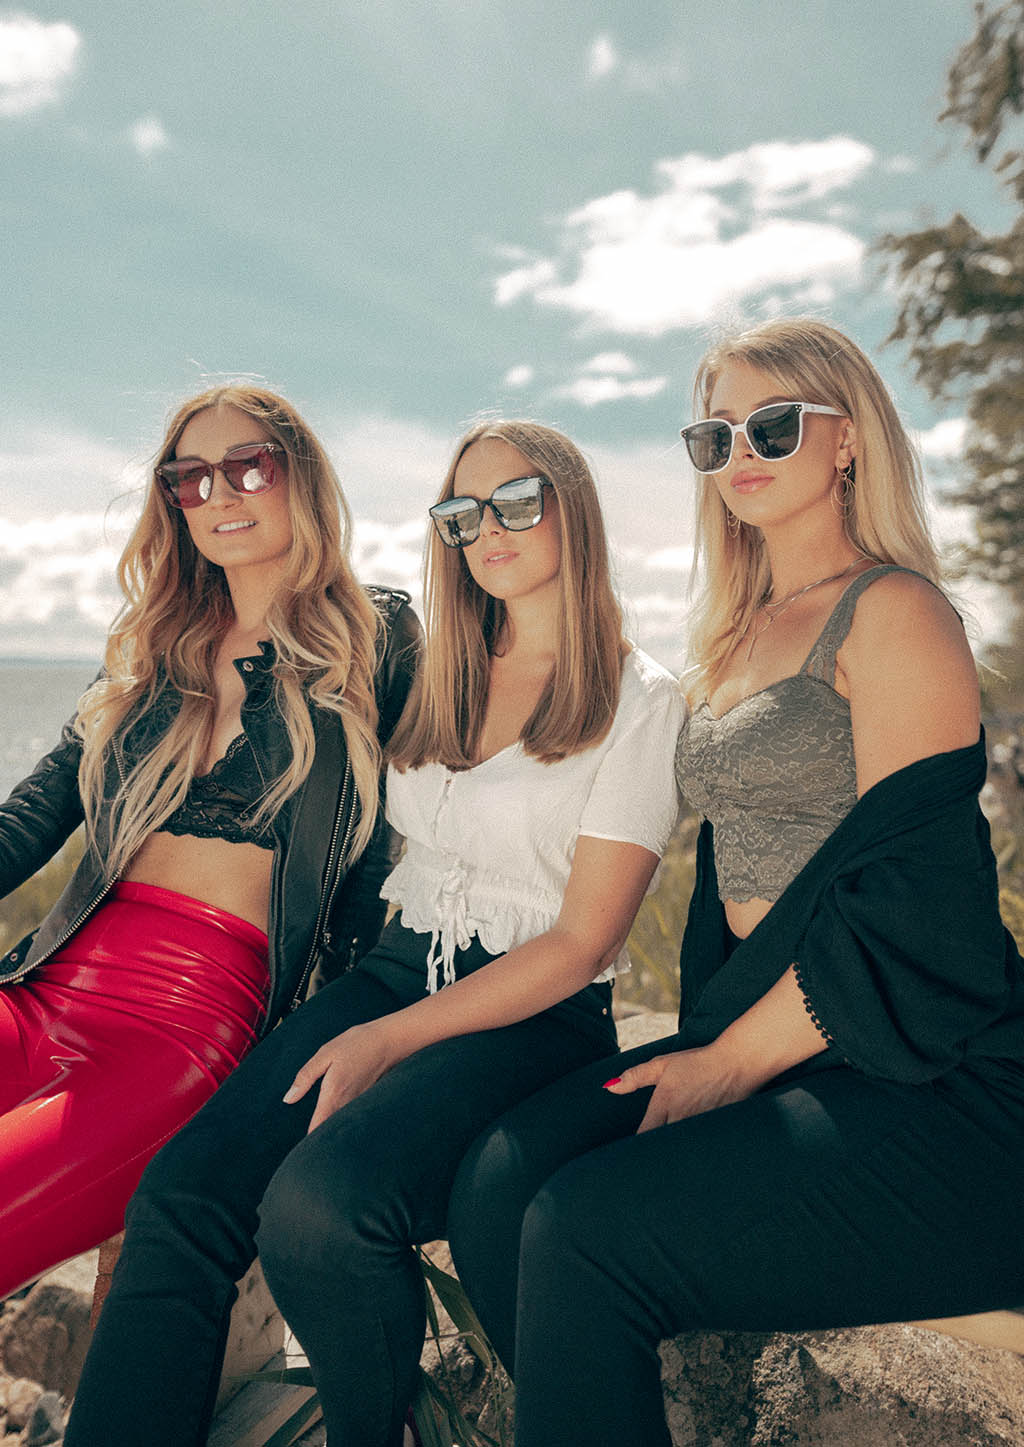 Magnolia Wayfarer sunglasses - Team of female Wolt models